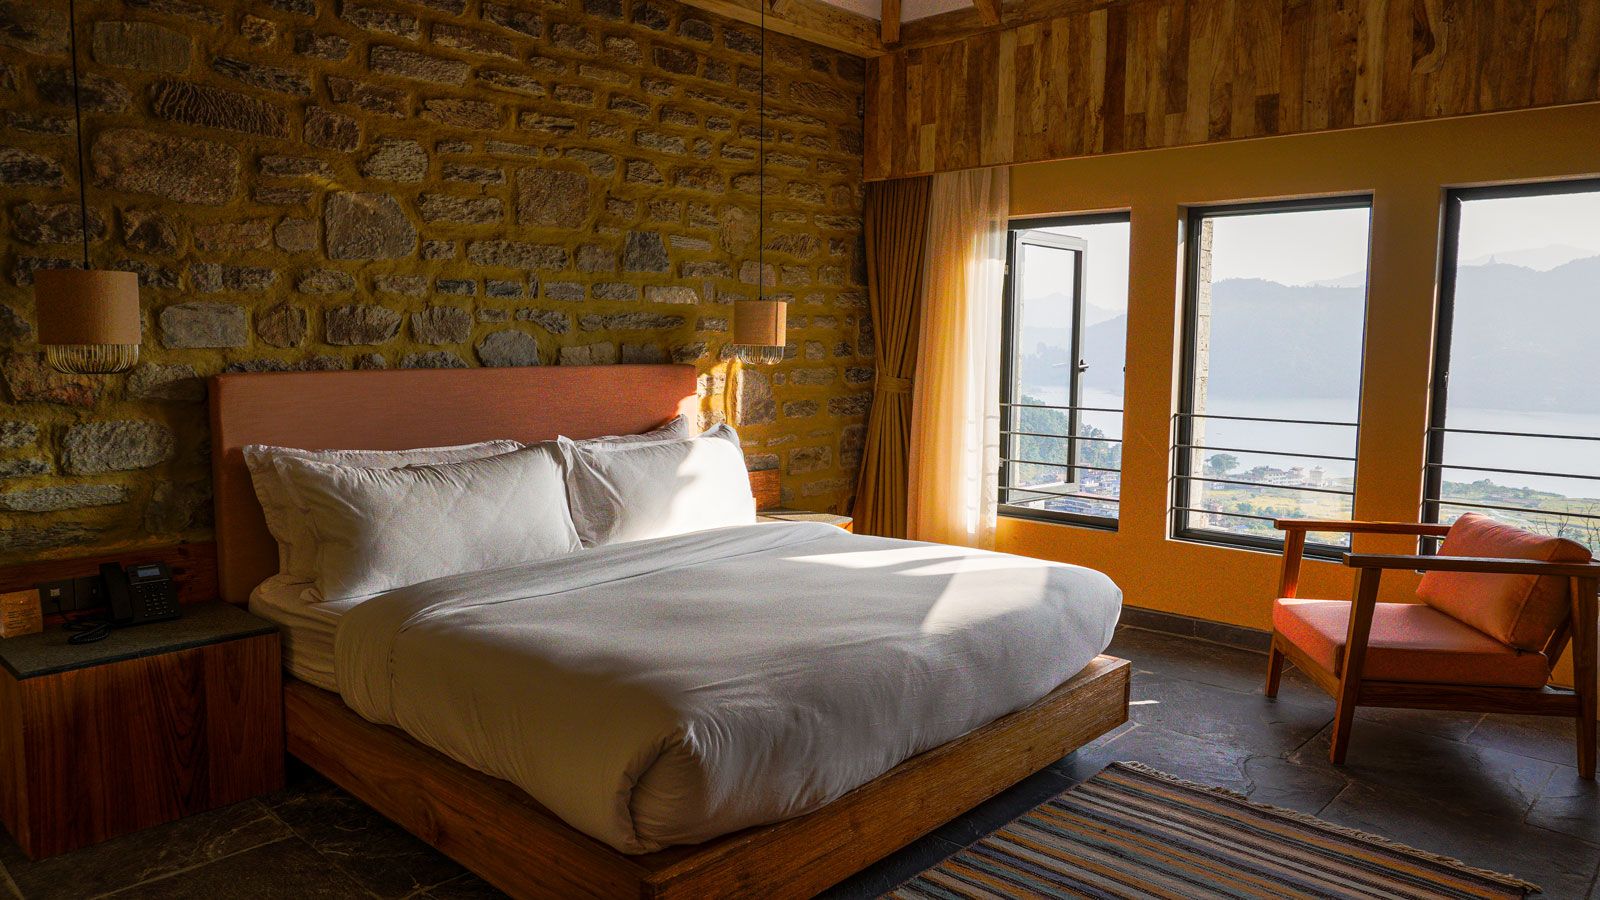 Junior suite room at Dorje's resort